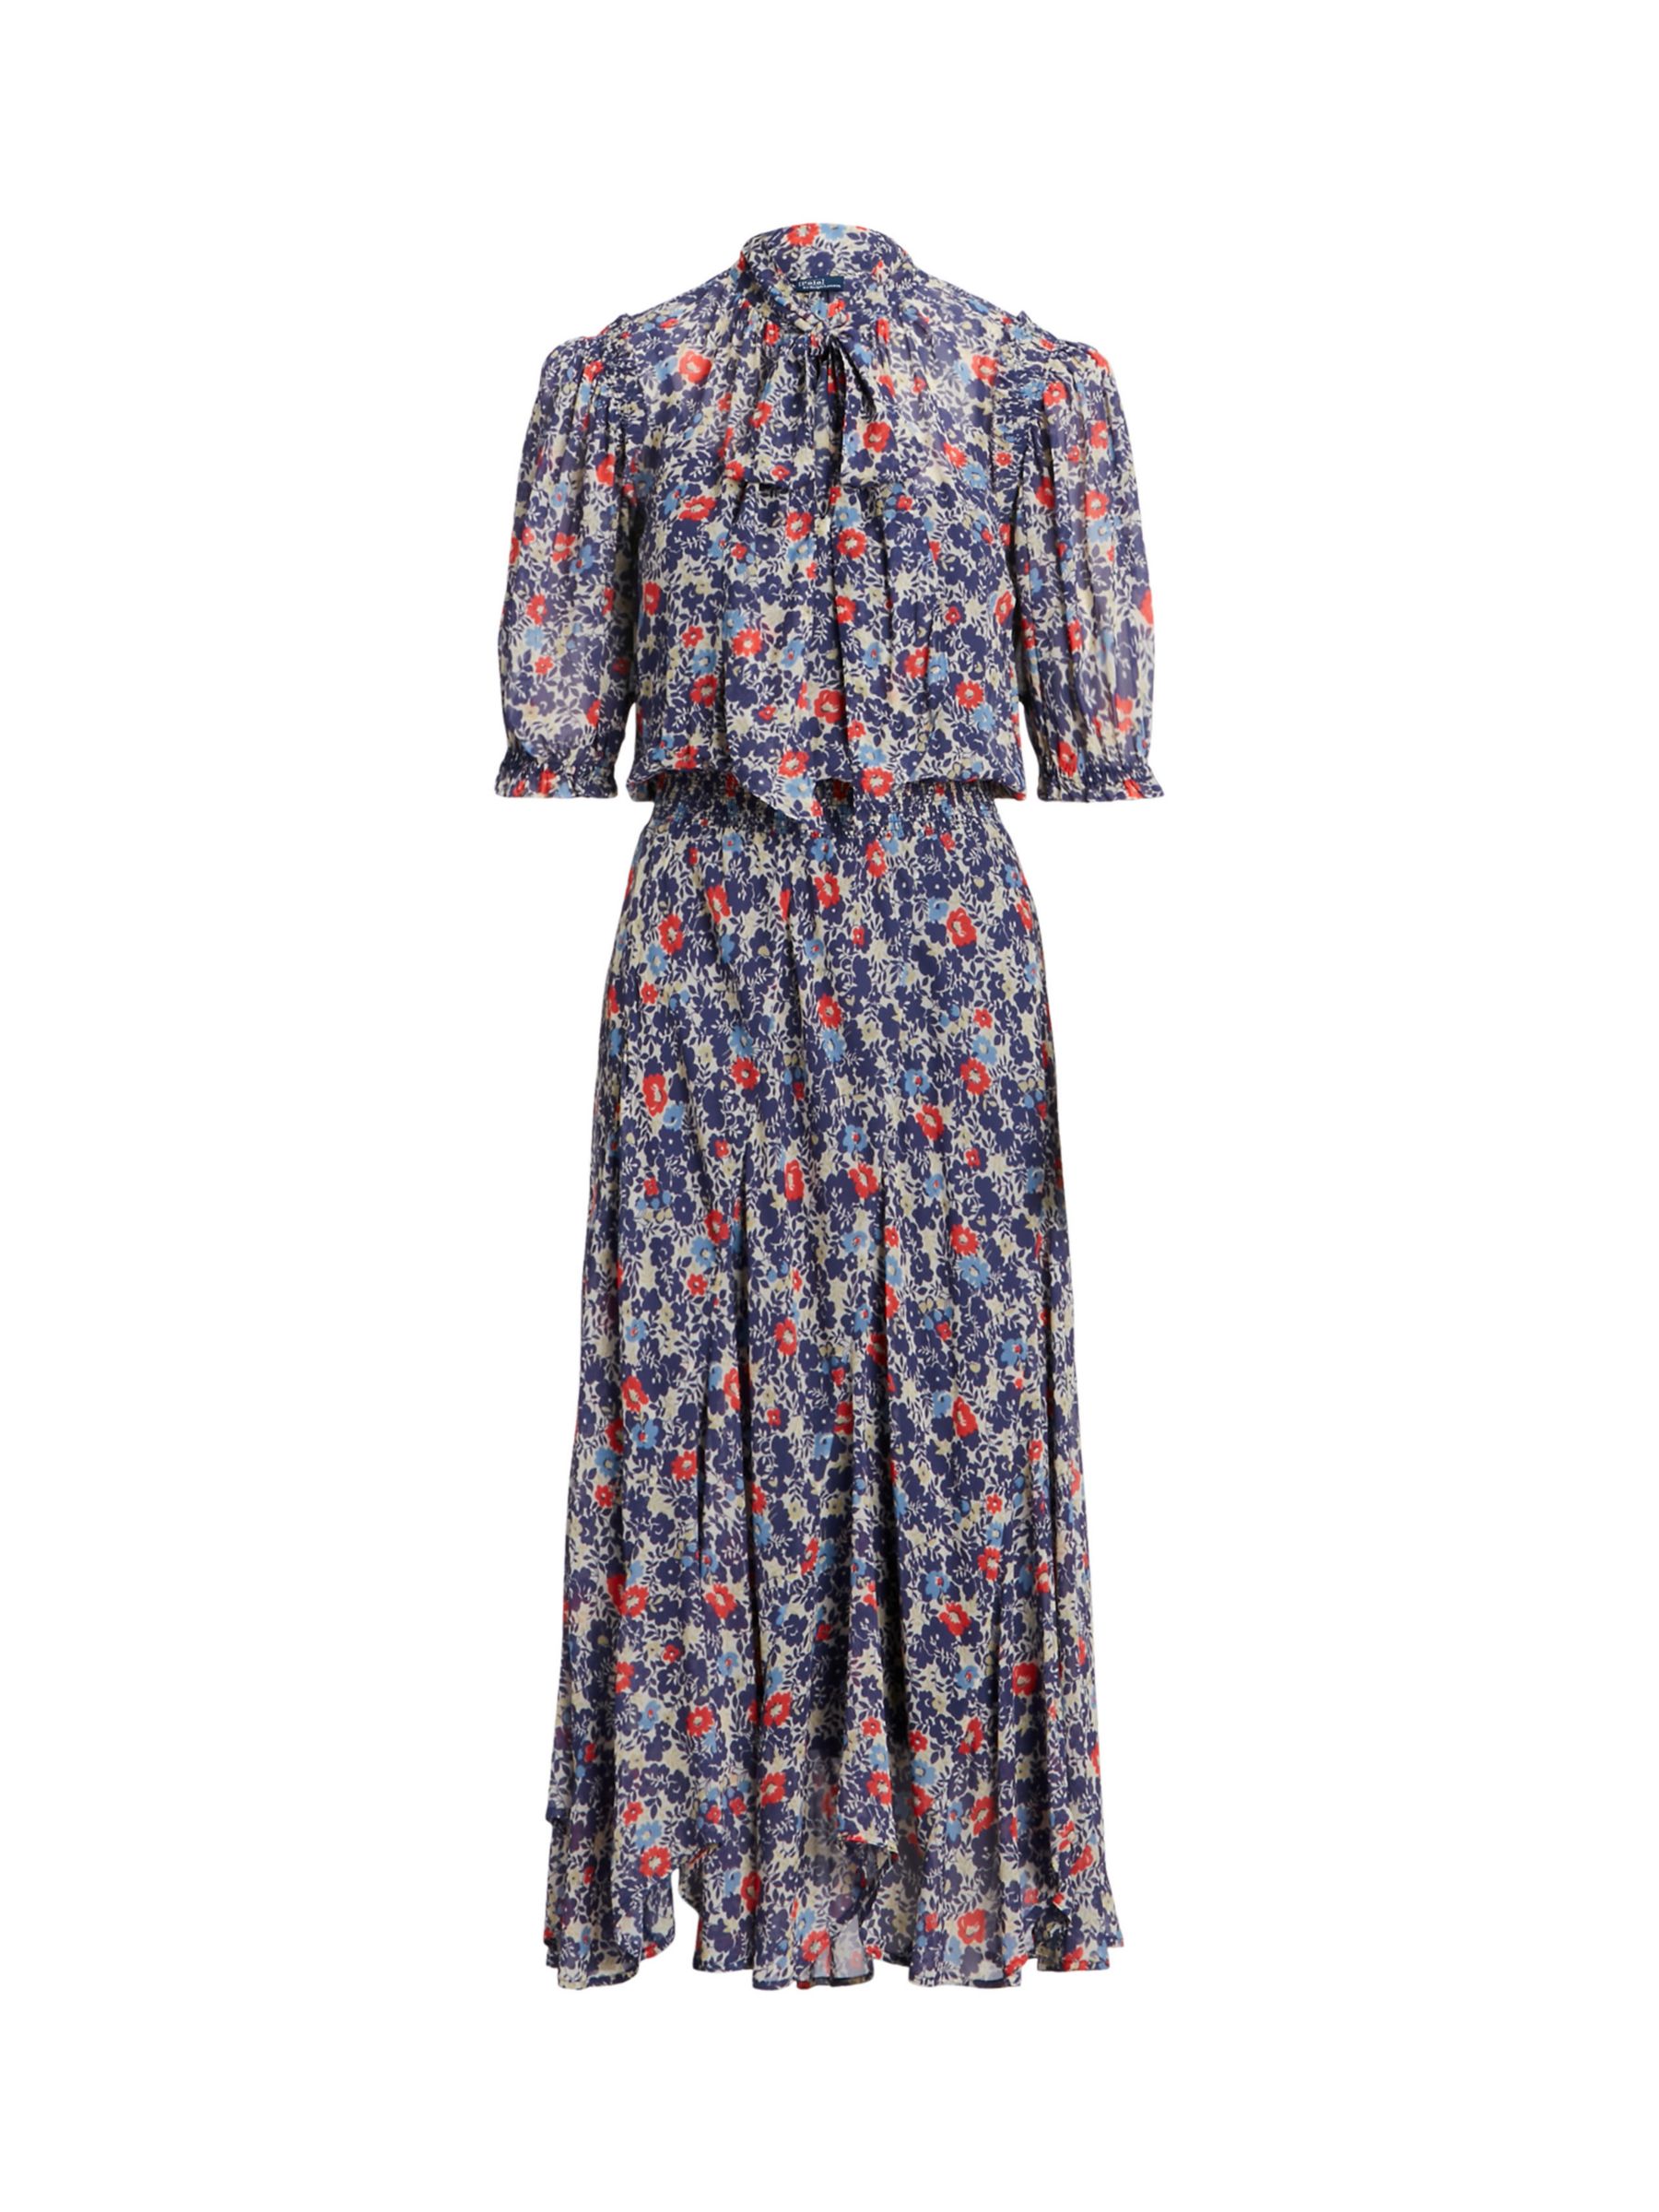 Polo Ralph Lauren Floral Print Georgette Maxi Dress, Red/Blue, XS